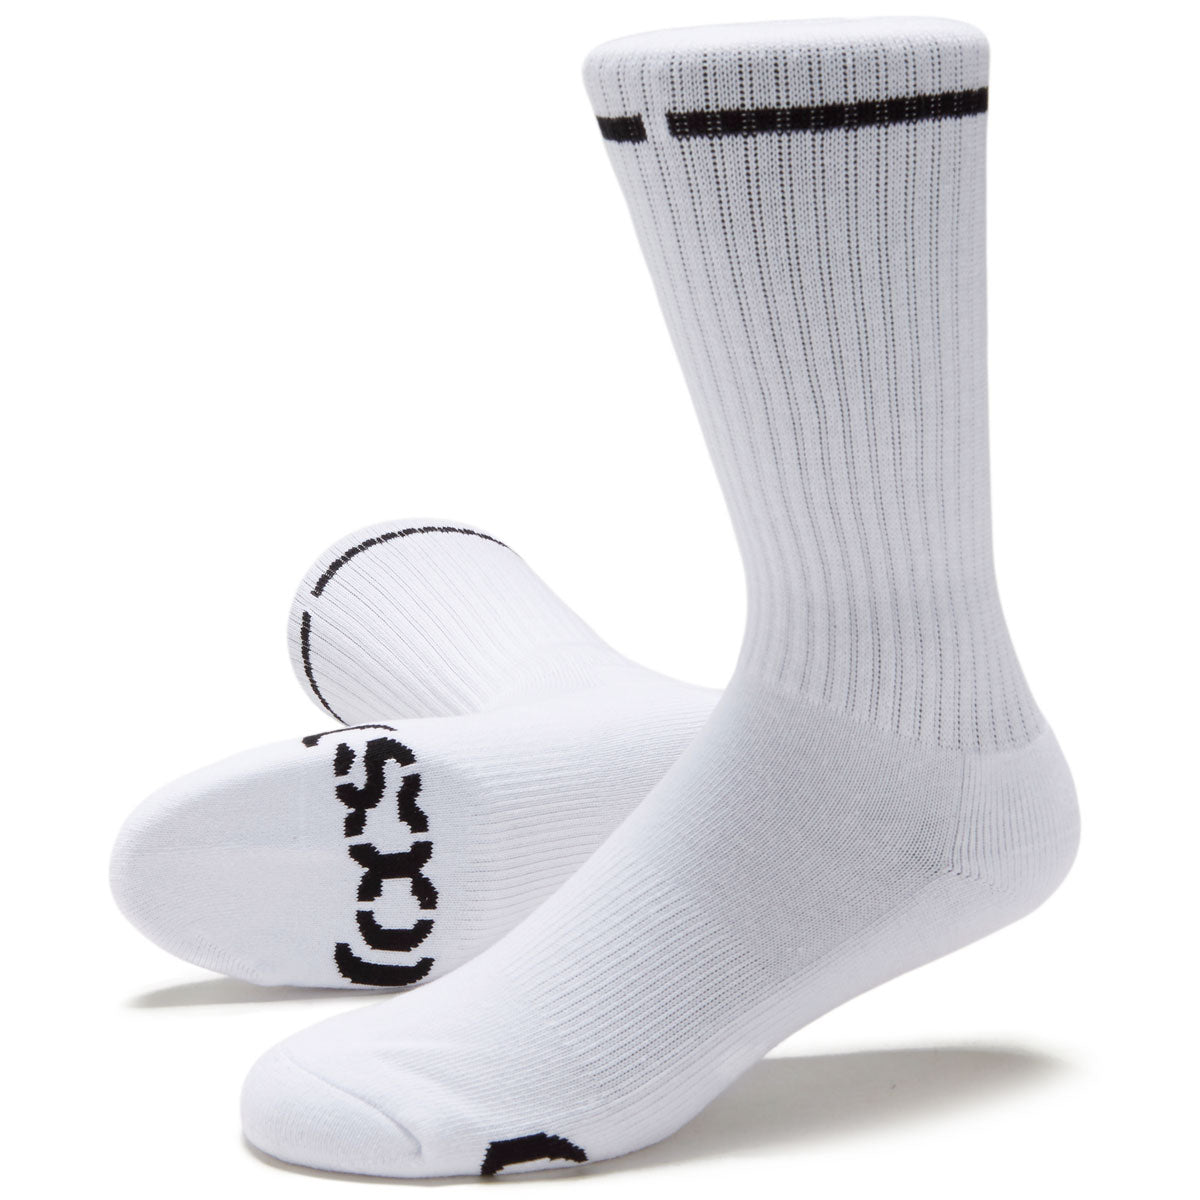 CCS Primary Socks - White/Black image 2